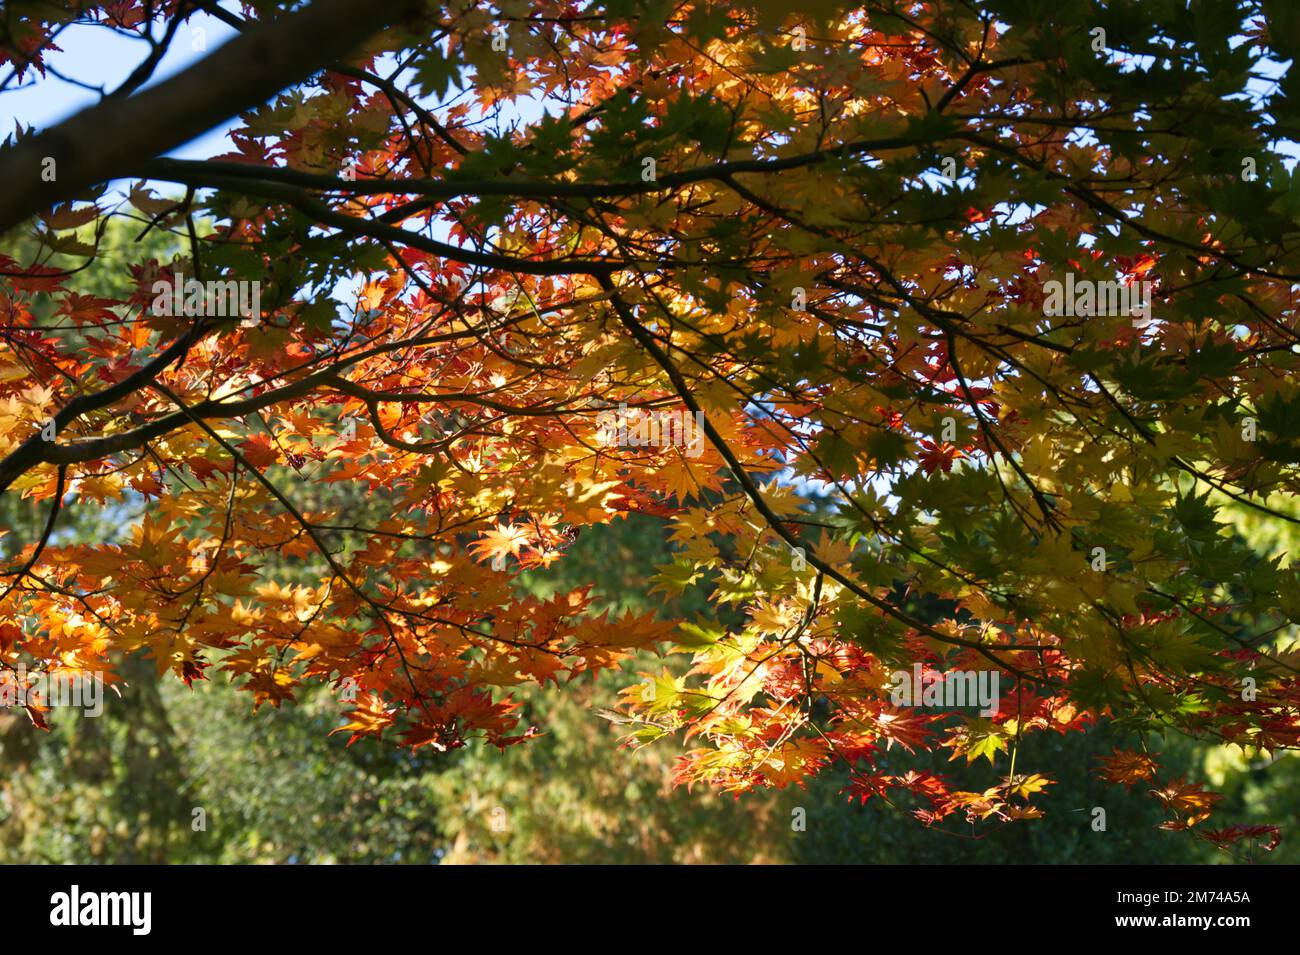 Autumn foliage of acer sieboldianum in UK garden October Stock Photo